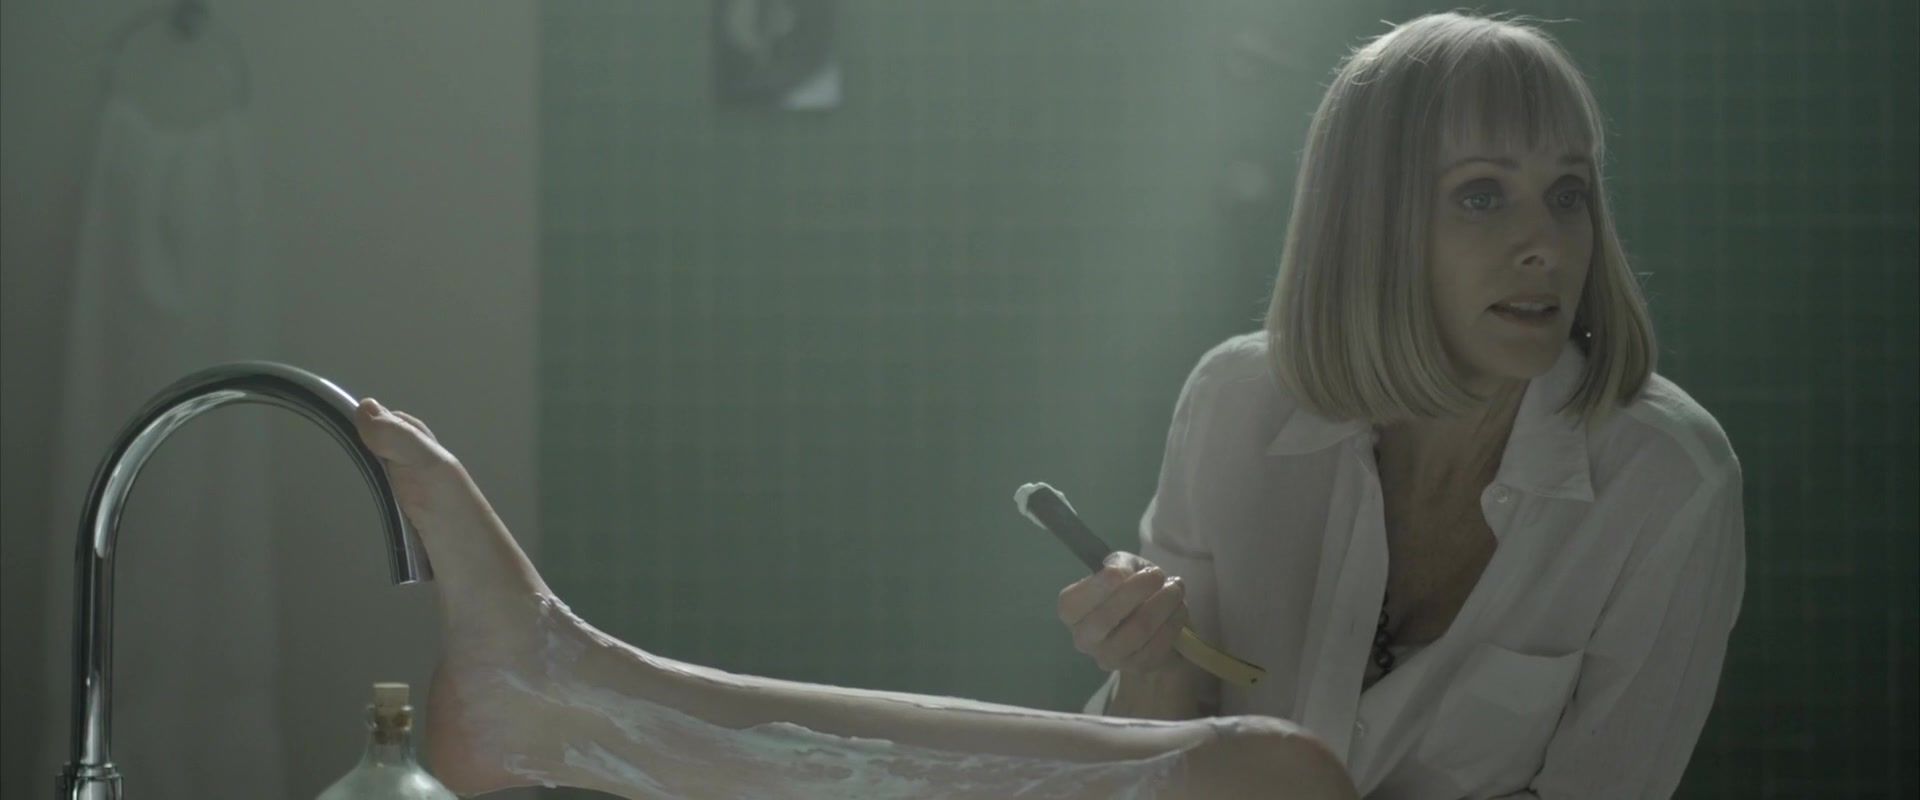 Riley Steele Shaving legs and a nude scene in the bathroom with topless celebrity Sara Malakul of the movie "Sun Choke" Ladyboy